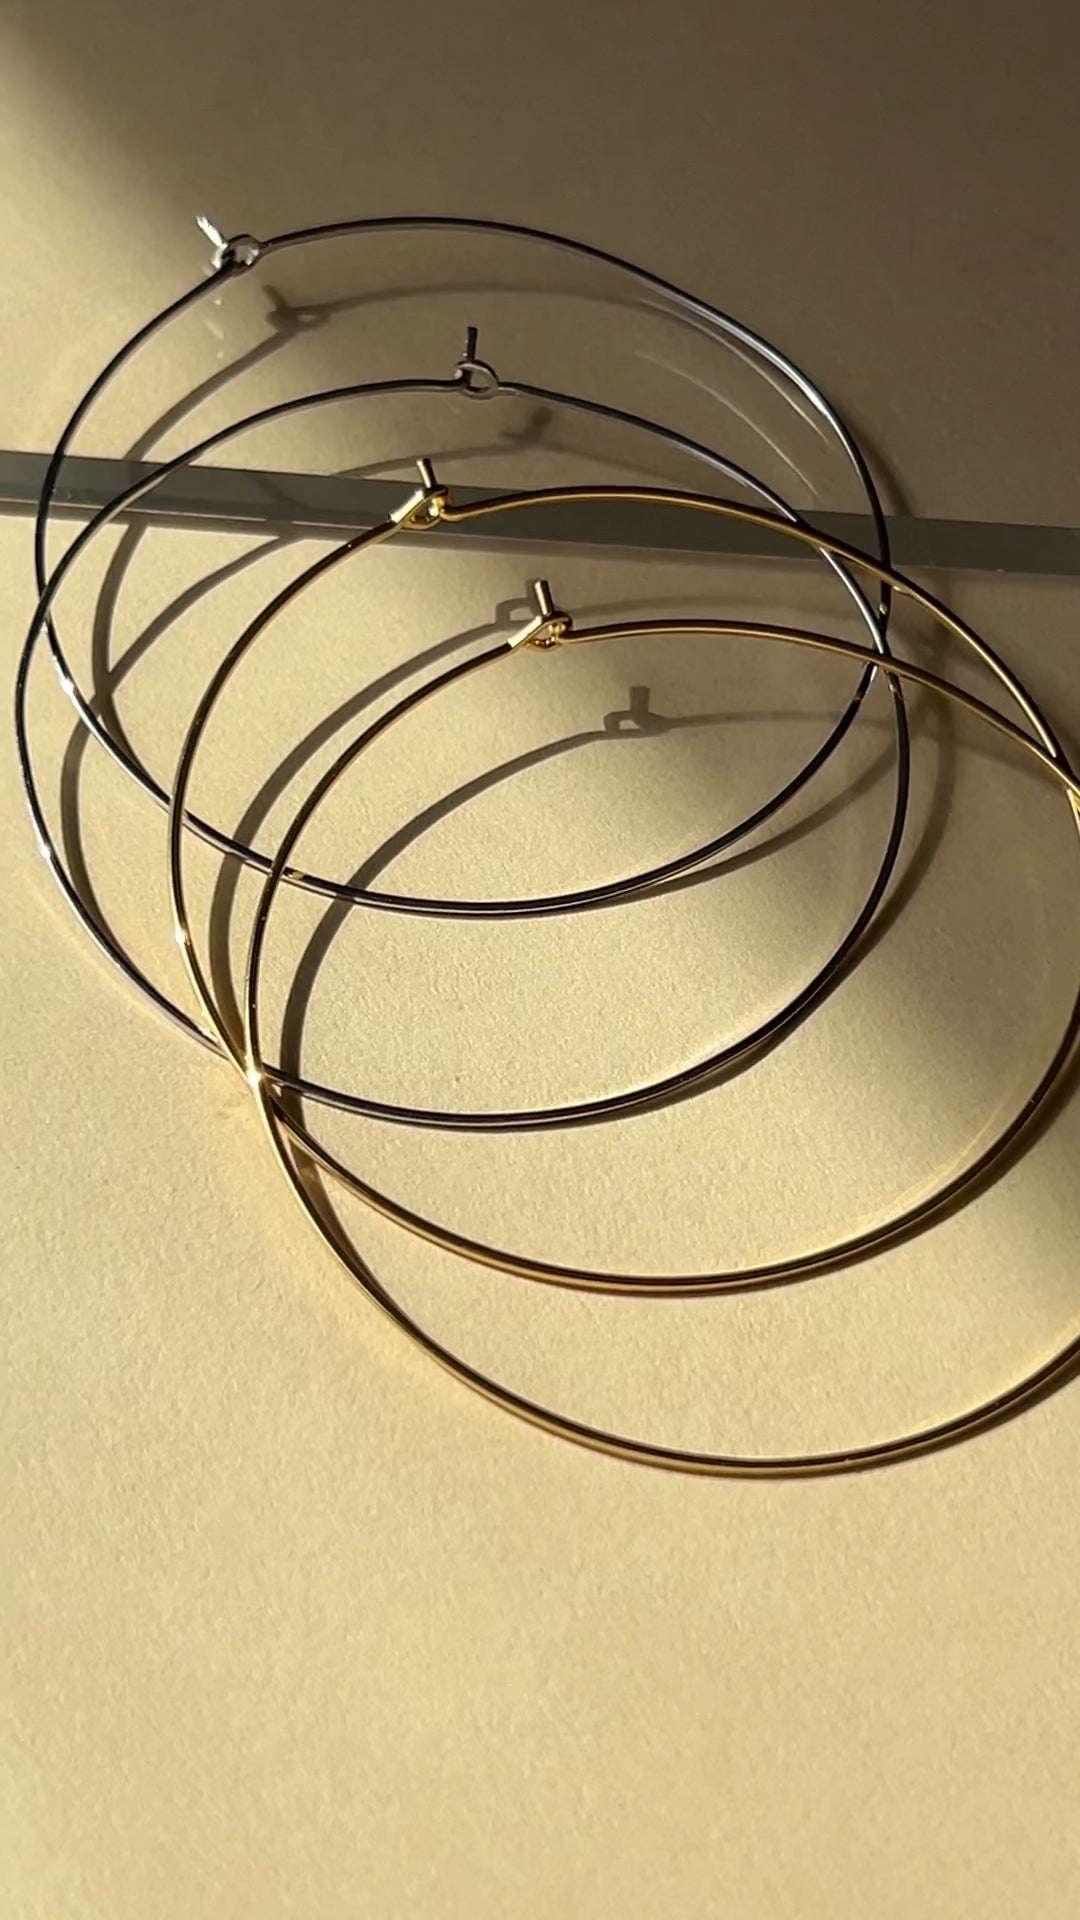 Luv Aj Capri Large Thin Wire Hoop Earrings in Polished 14k Gold